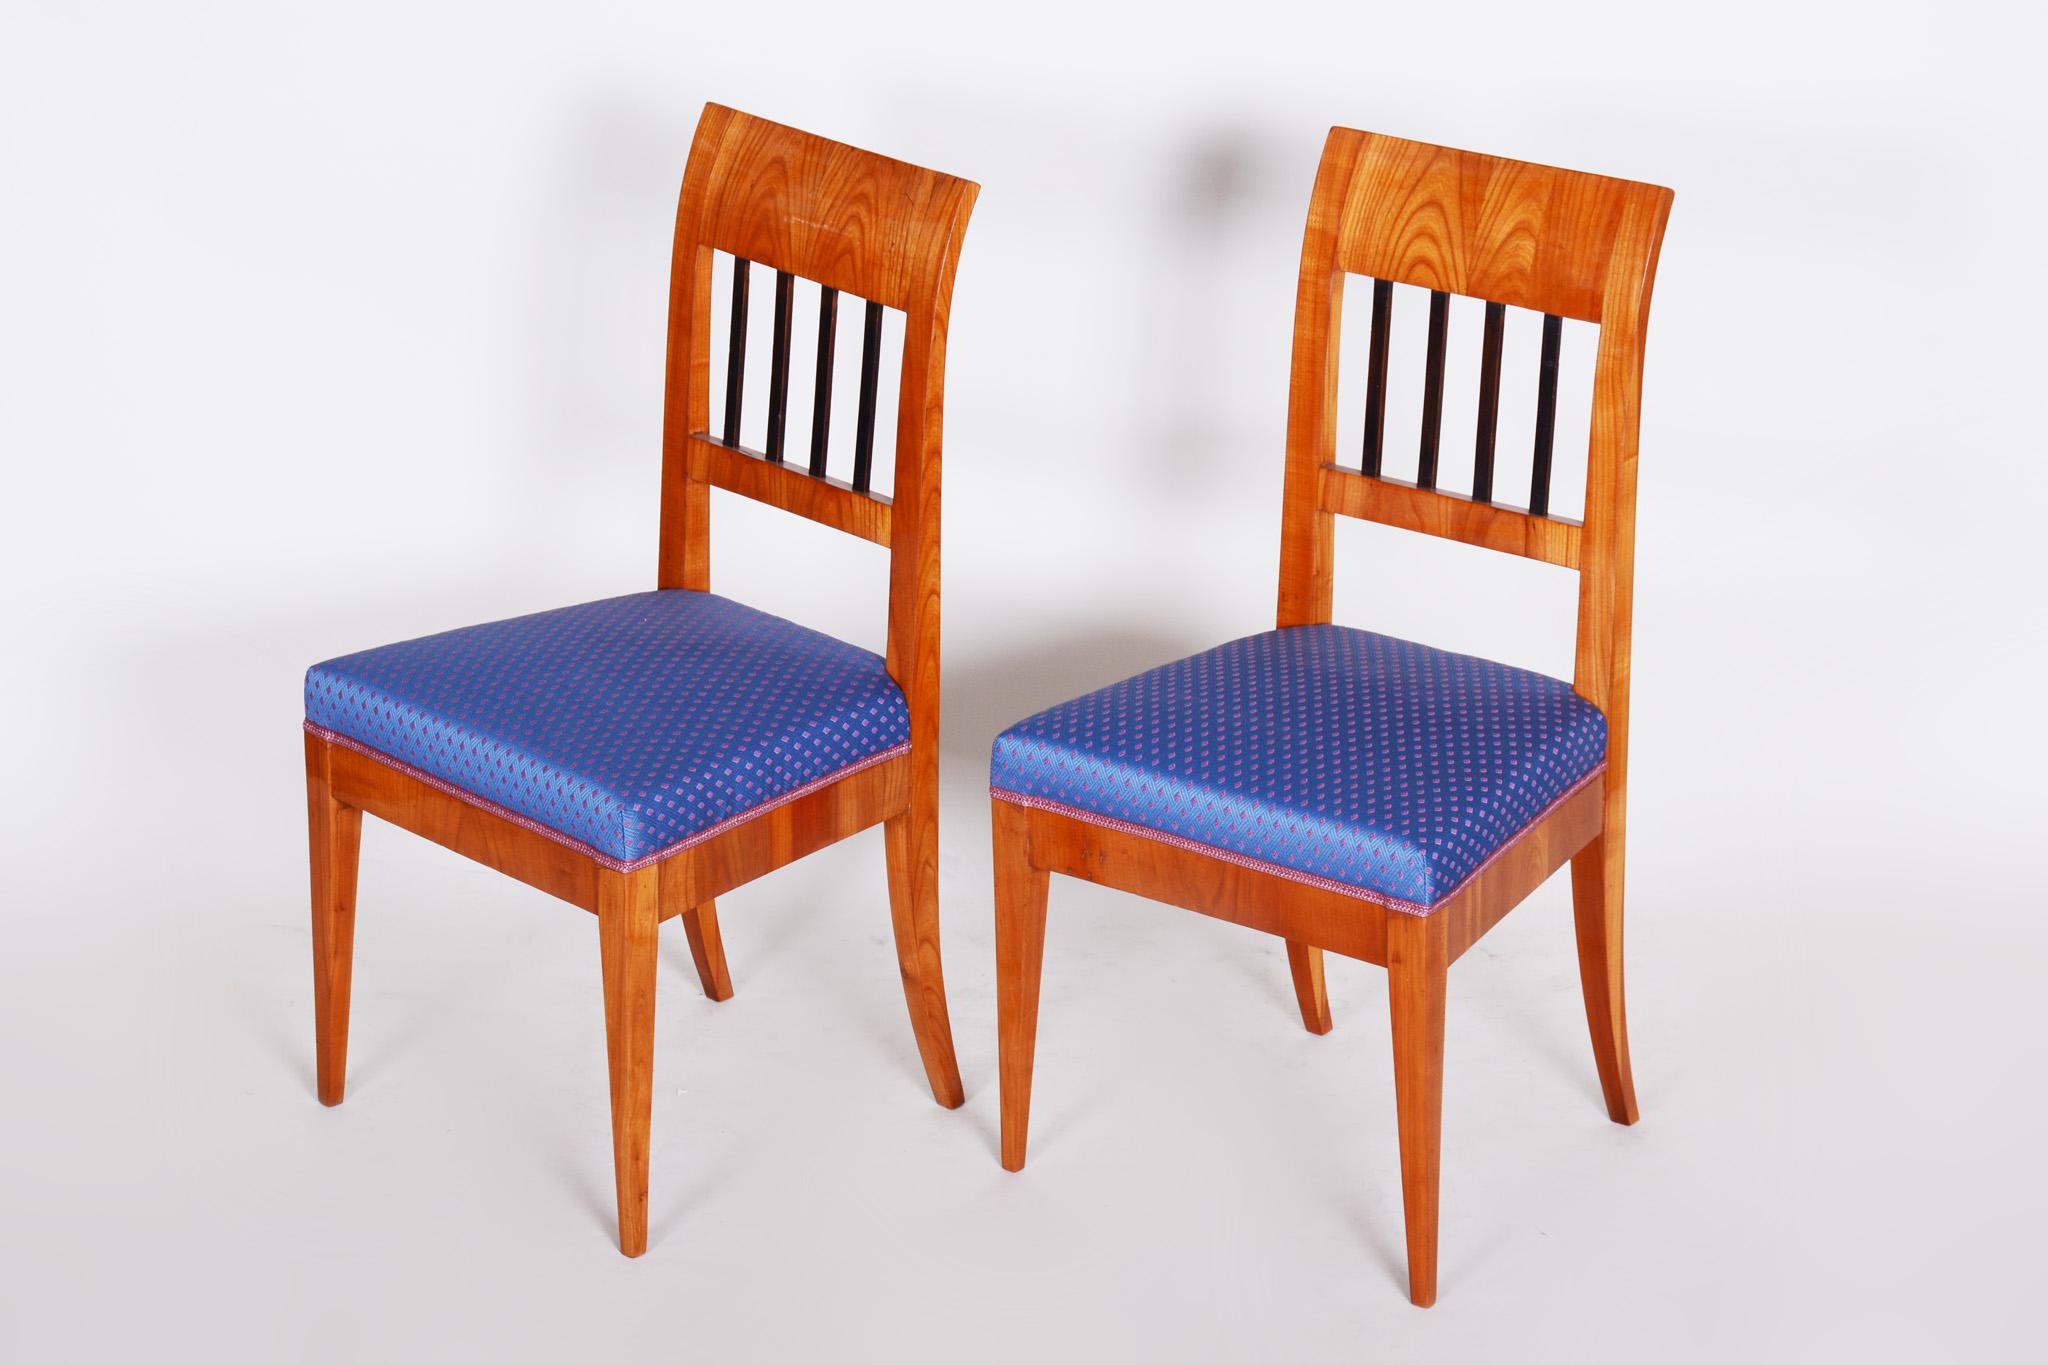 Pair of Early 19th Century Czech Biedermeier Chairs, Czechia, Cherry Tree, 1820s For Sale 2